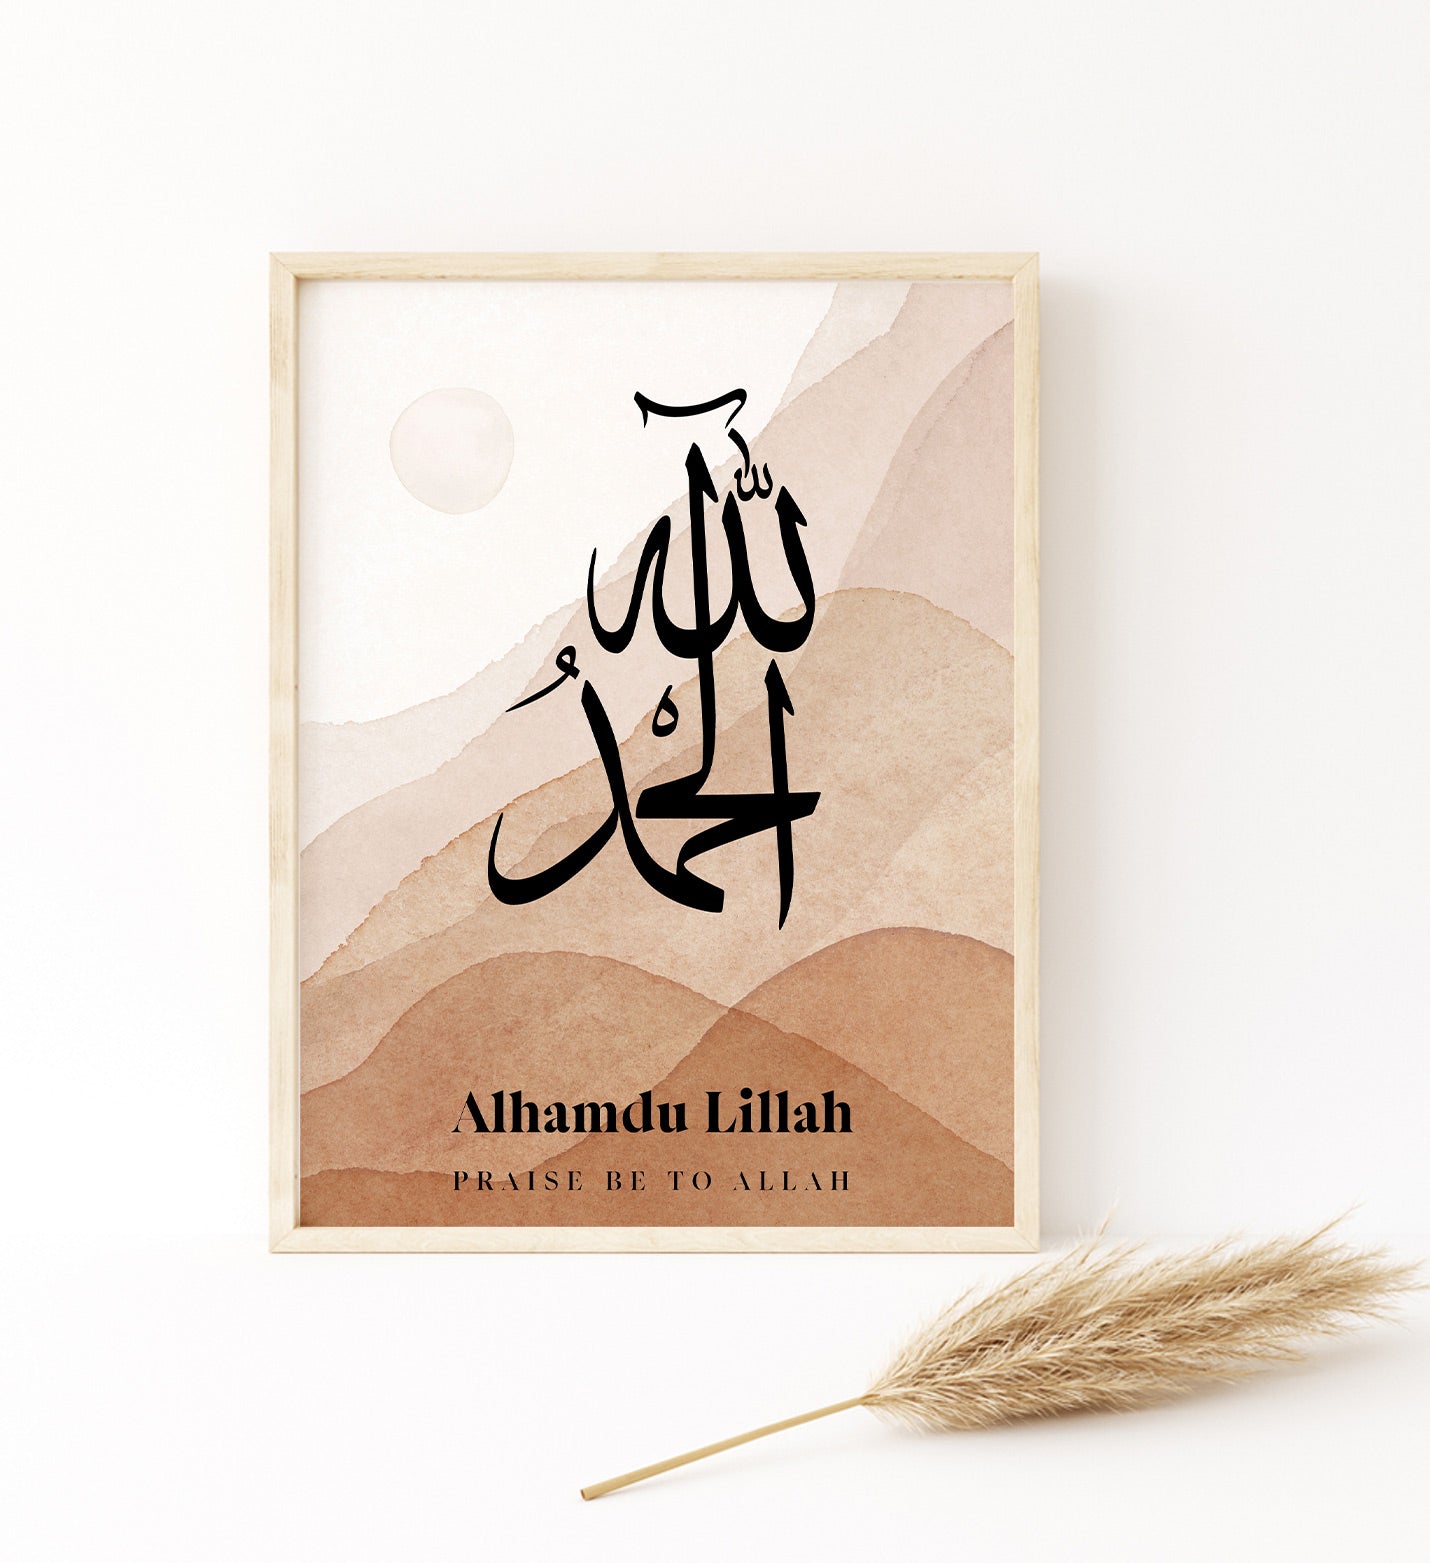 SubhanAllah Alhamdulillah AllahuAkbar in Arabic with English translation,